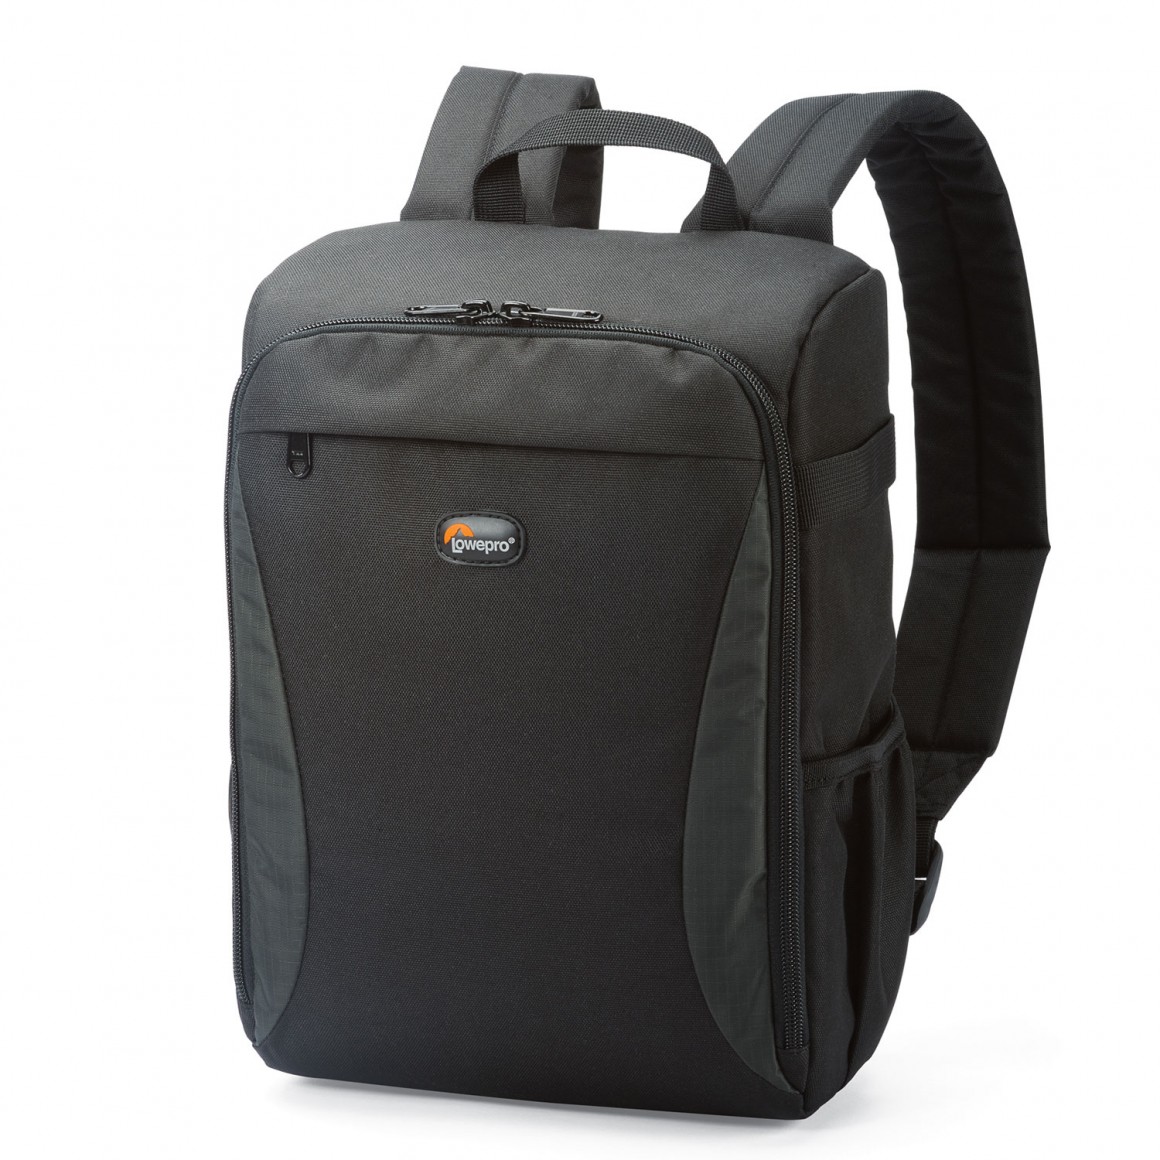 Rucsac Lowepro Format Backpack 150, Negru